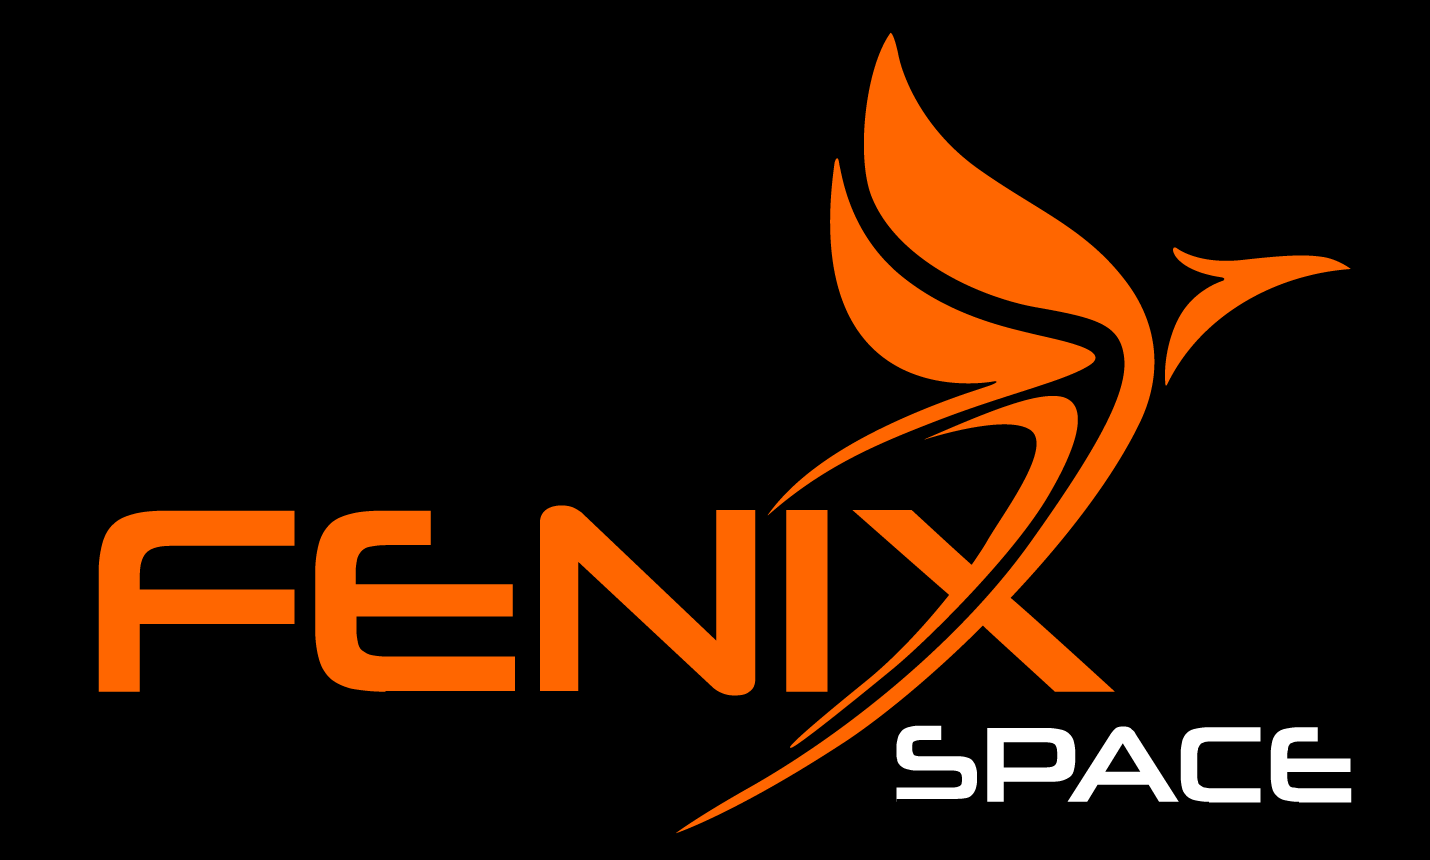 Fenix Space logo